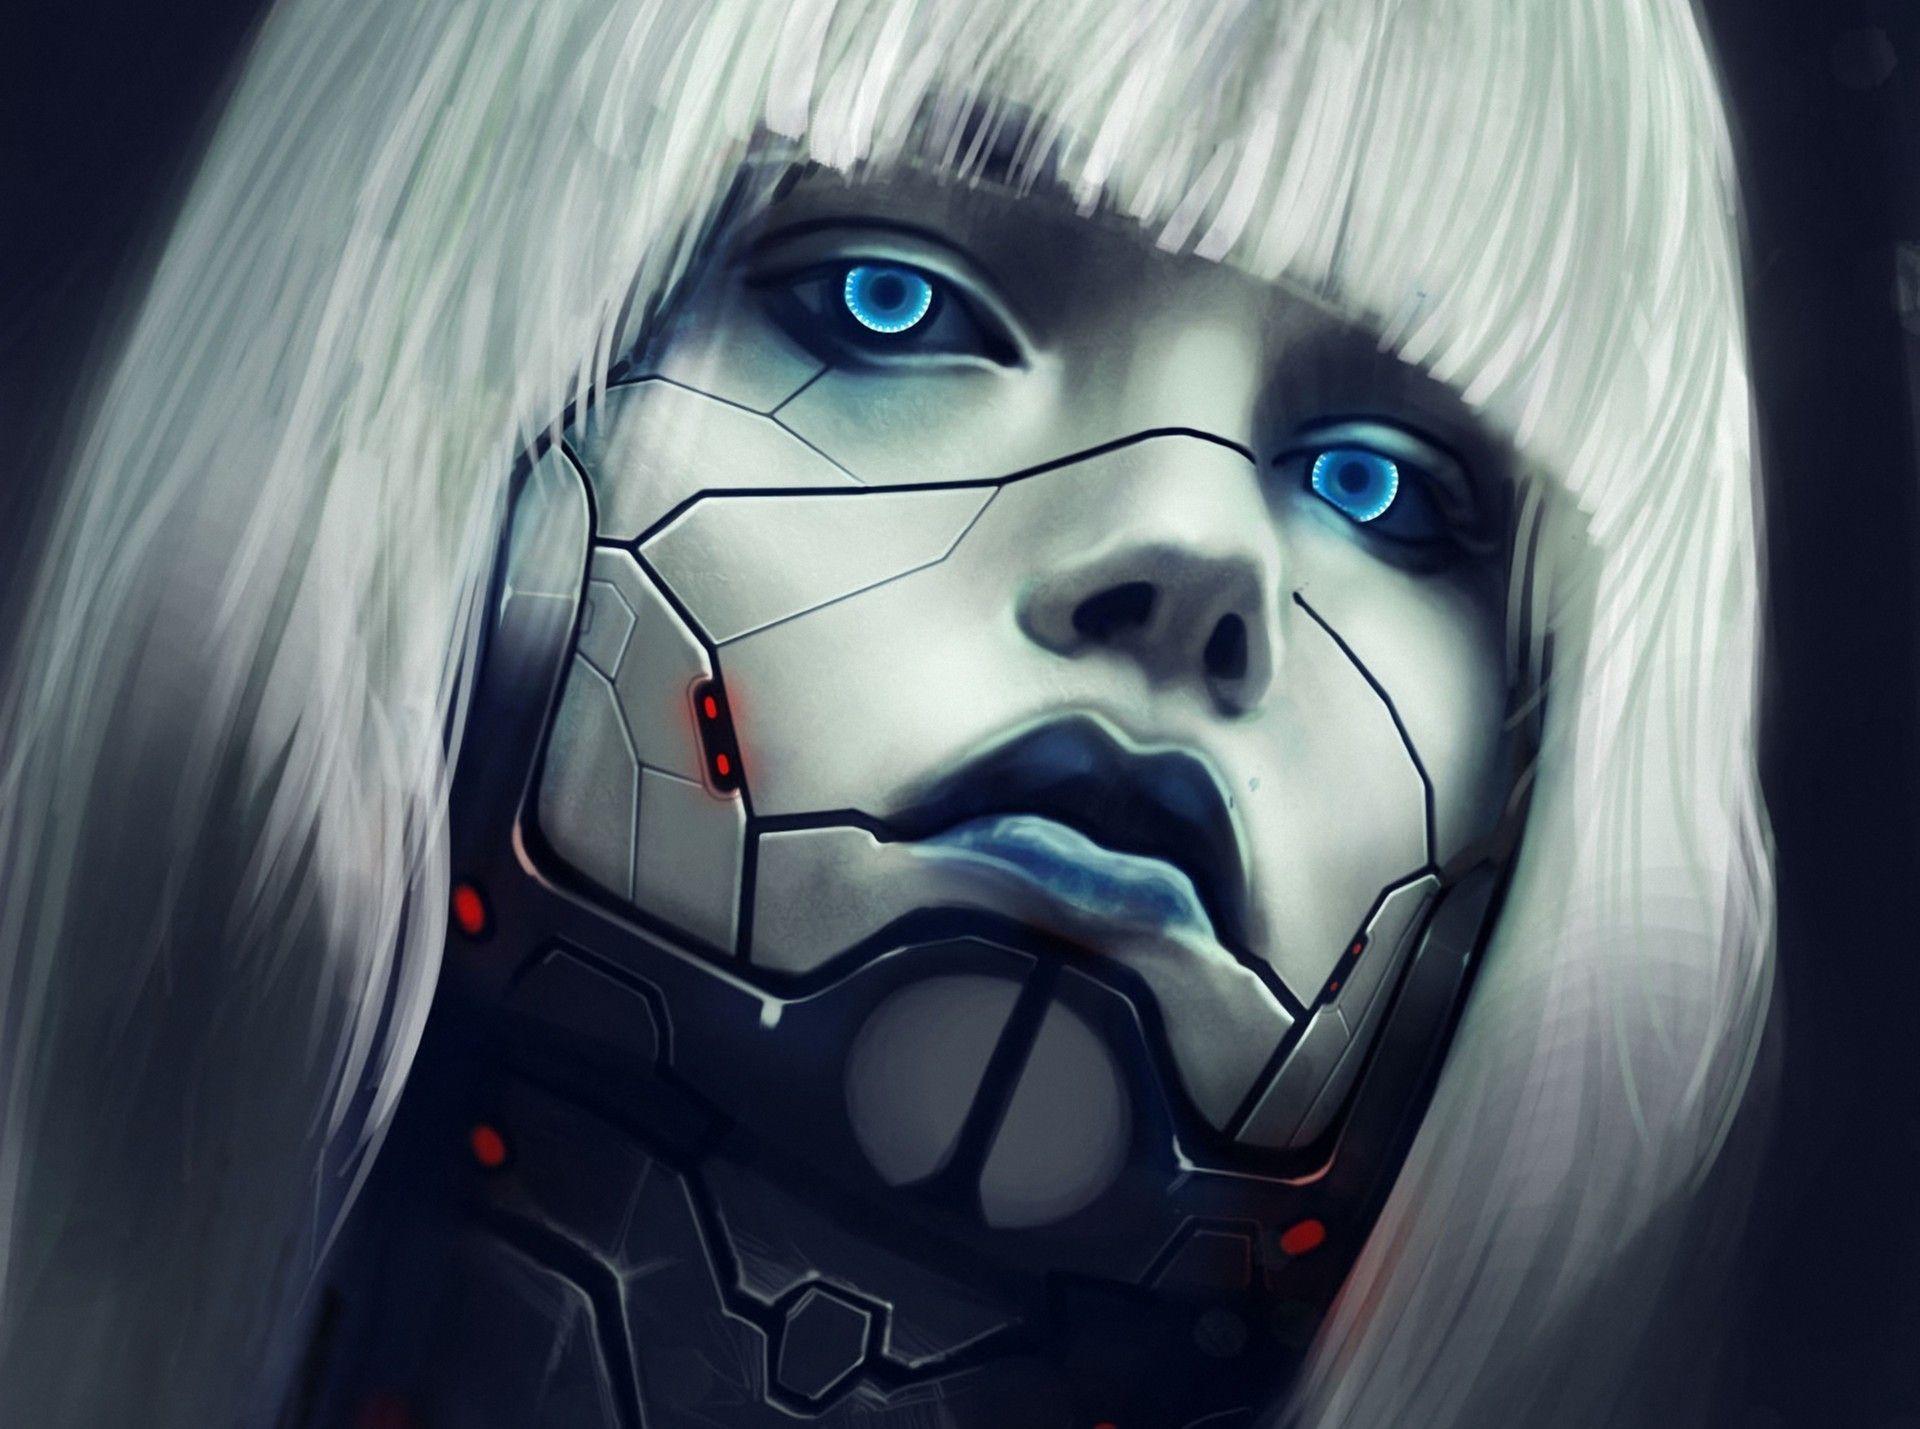 Eyes Robot Face Blonde Girl Hair Sci Fi Cyborg Women Females Face Eyes Wallpaper Background. Cyberpunk Art, Cyborg Girl, Cyberpunk